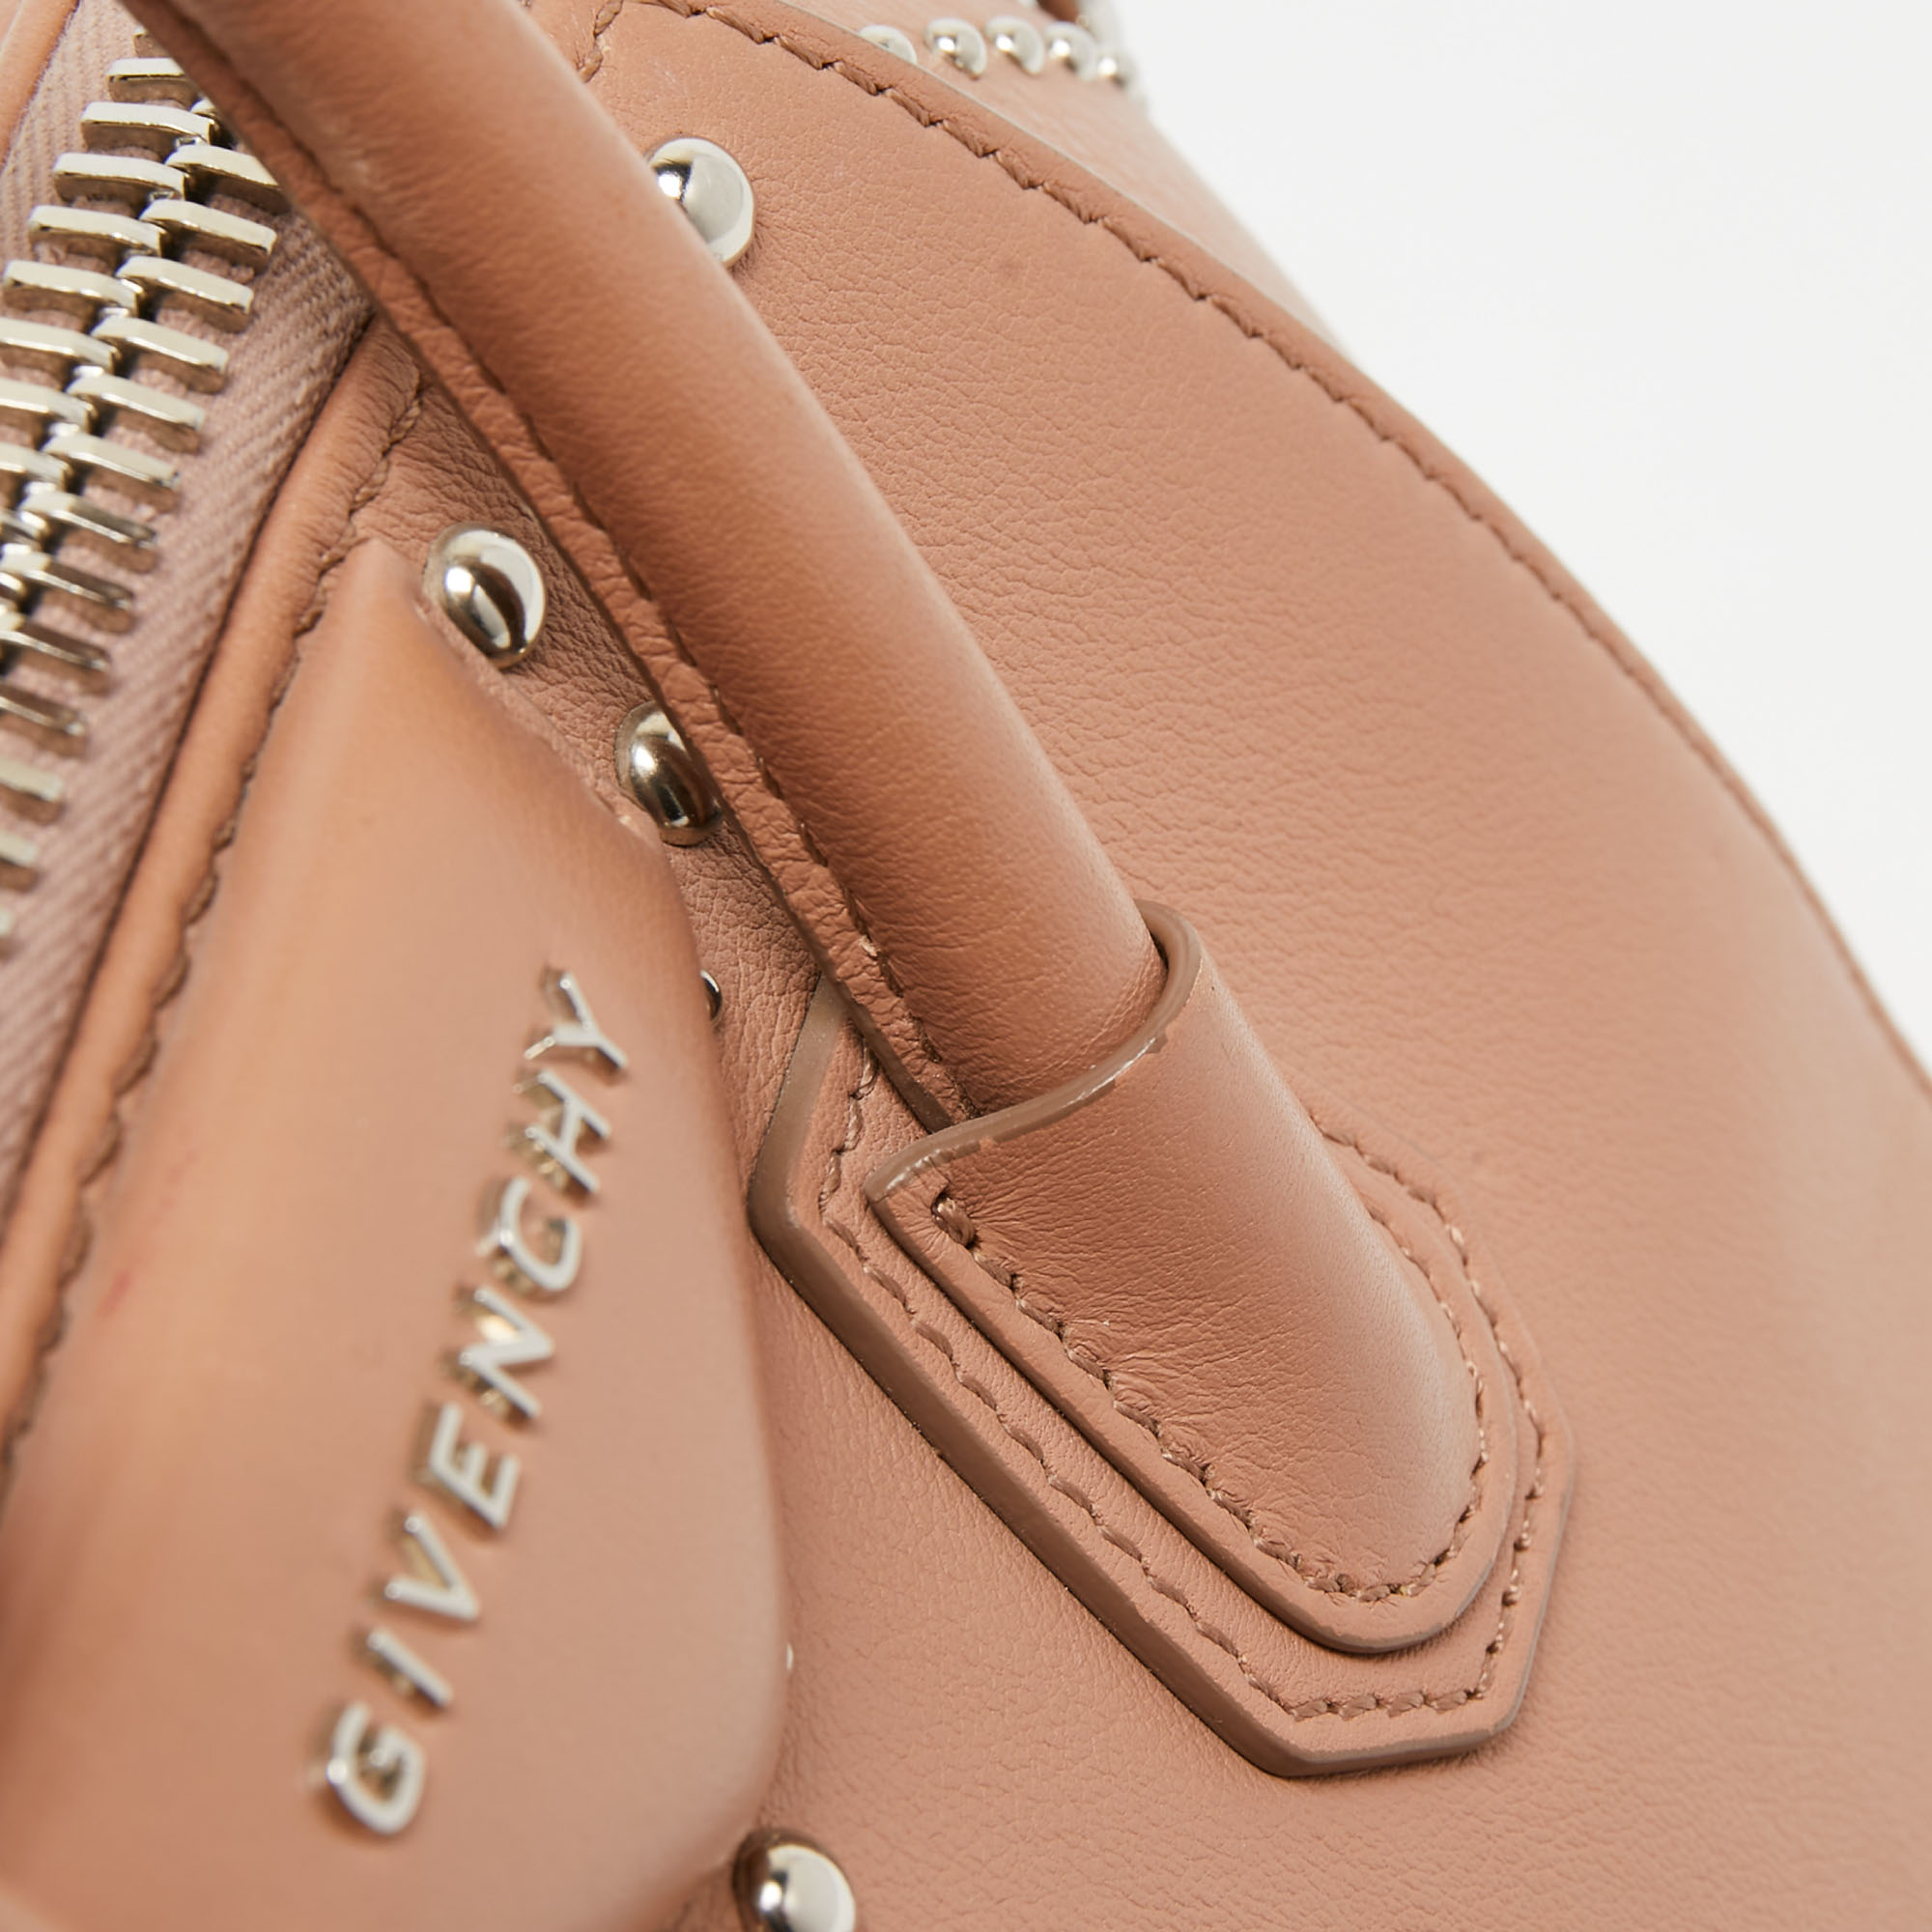 Givenchy Beige Leather Mini Antigona Satchel